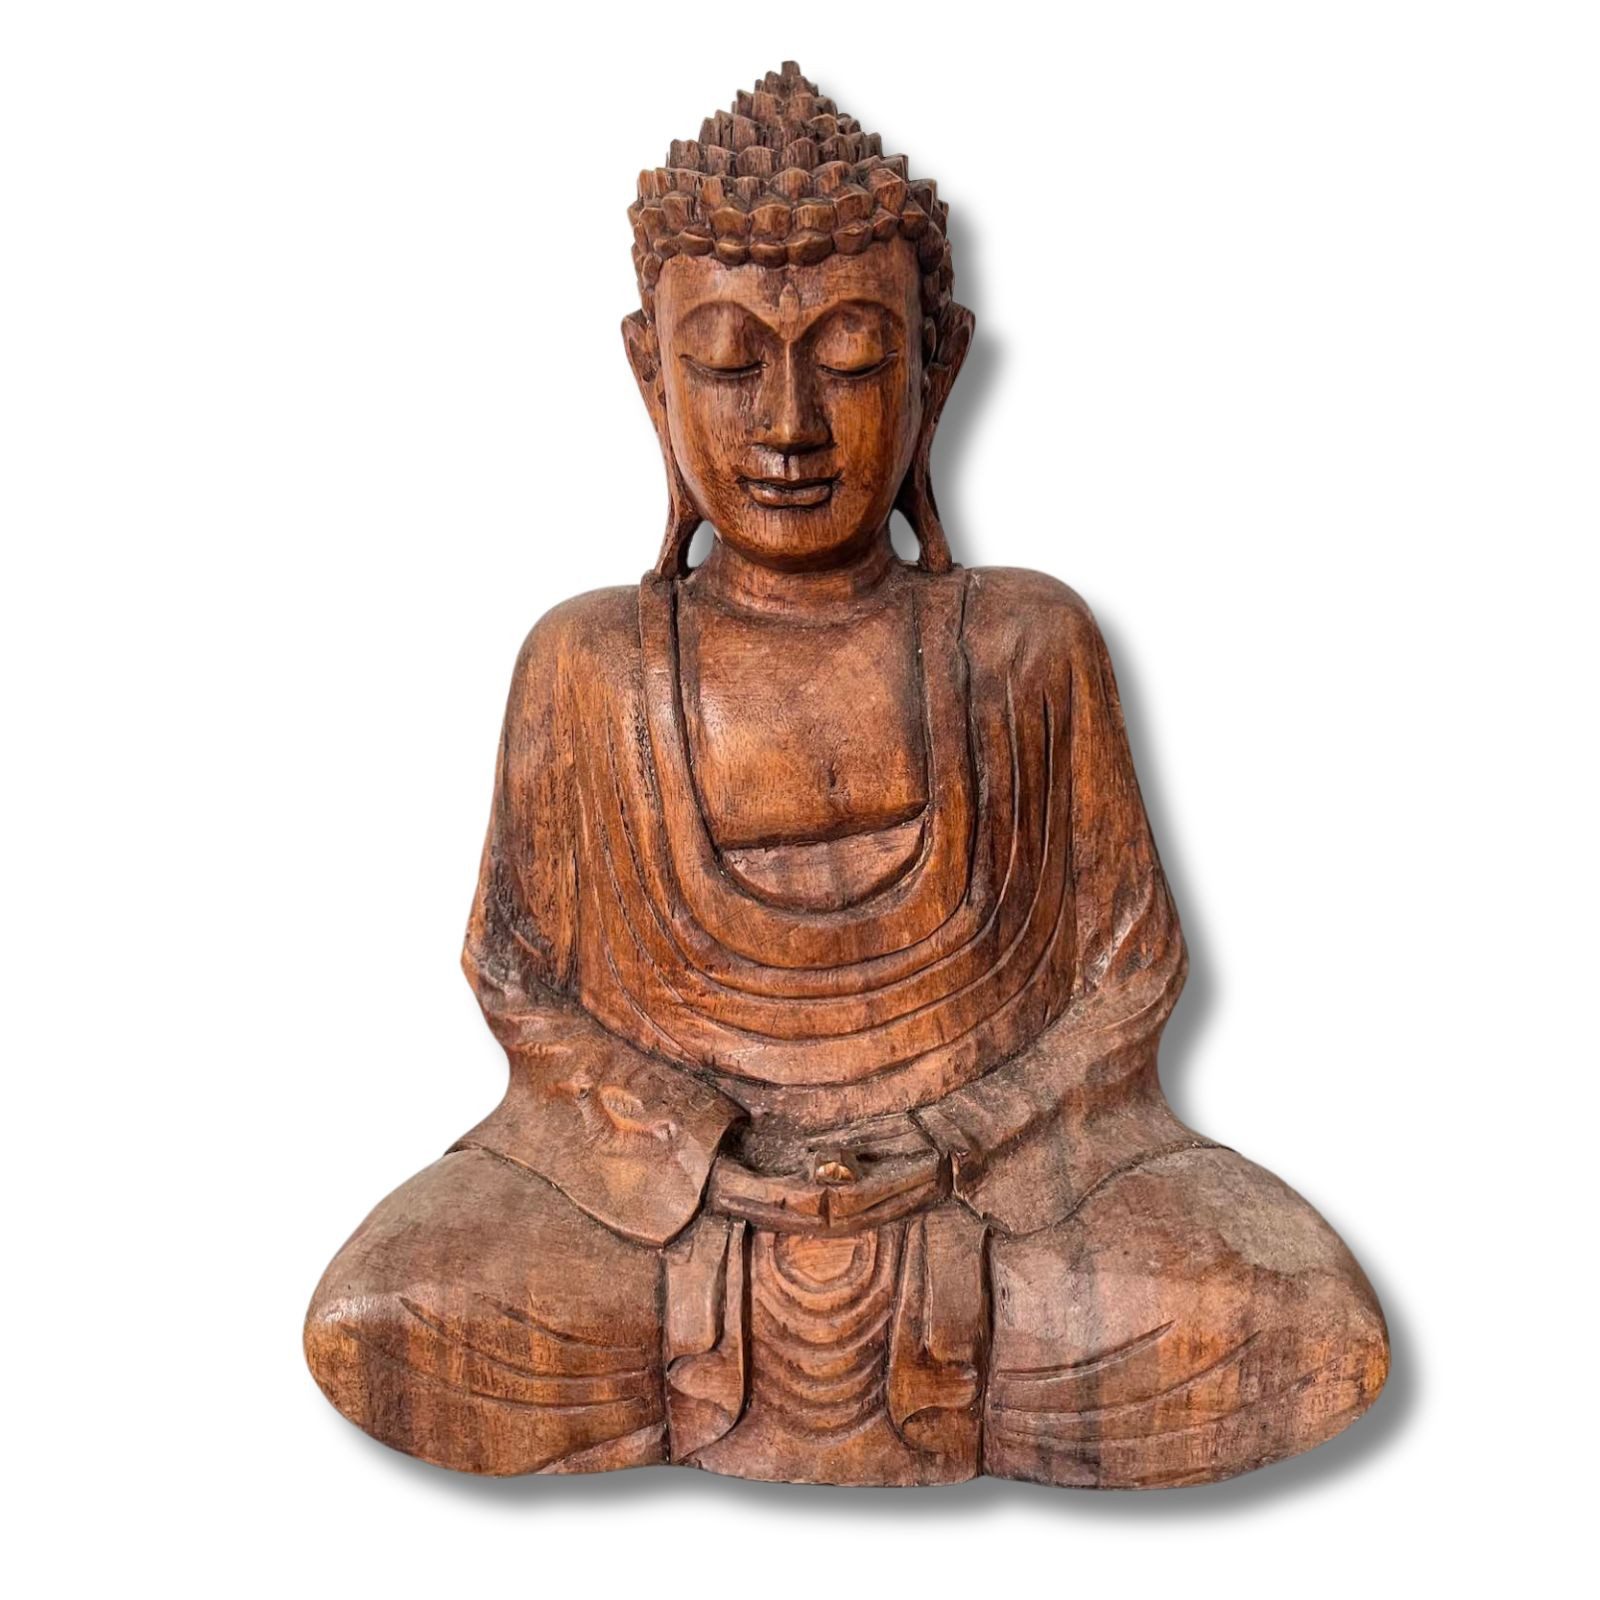 Asien LifeStyle Buddhafigur Meditation Buddha Figur aus Holz geschnitzt 34cm